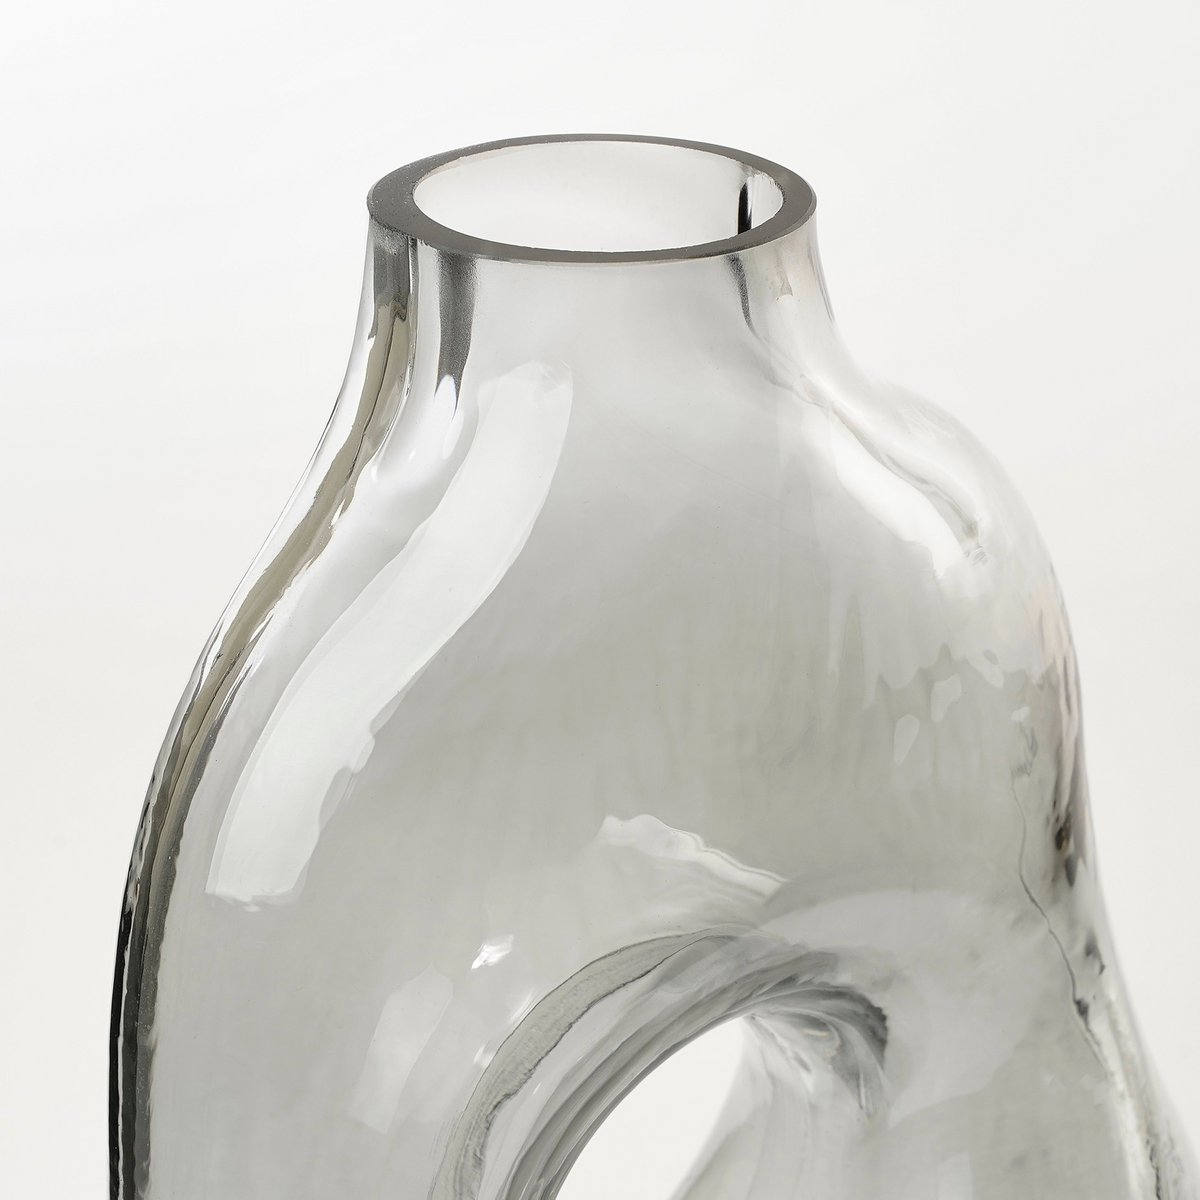 Jay Vase - L19 x W11 x H25 cm - Glass - Light gray